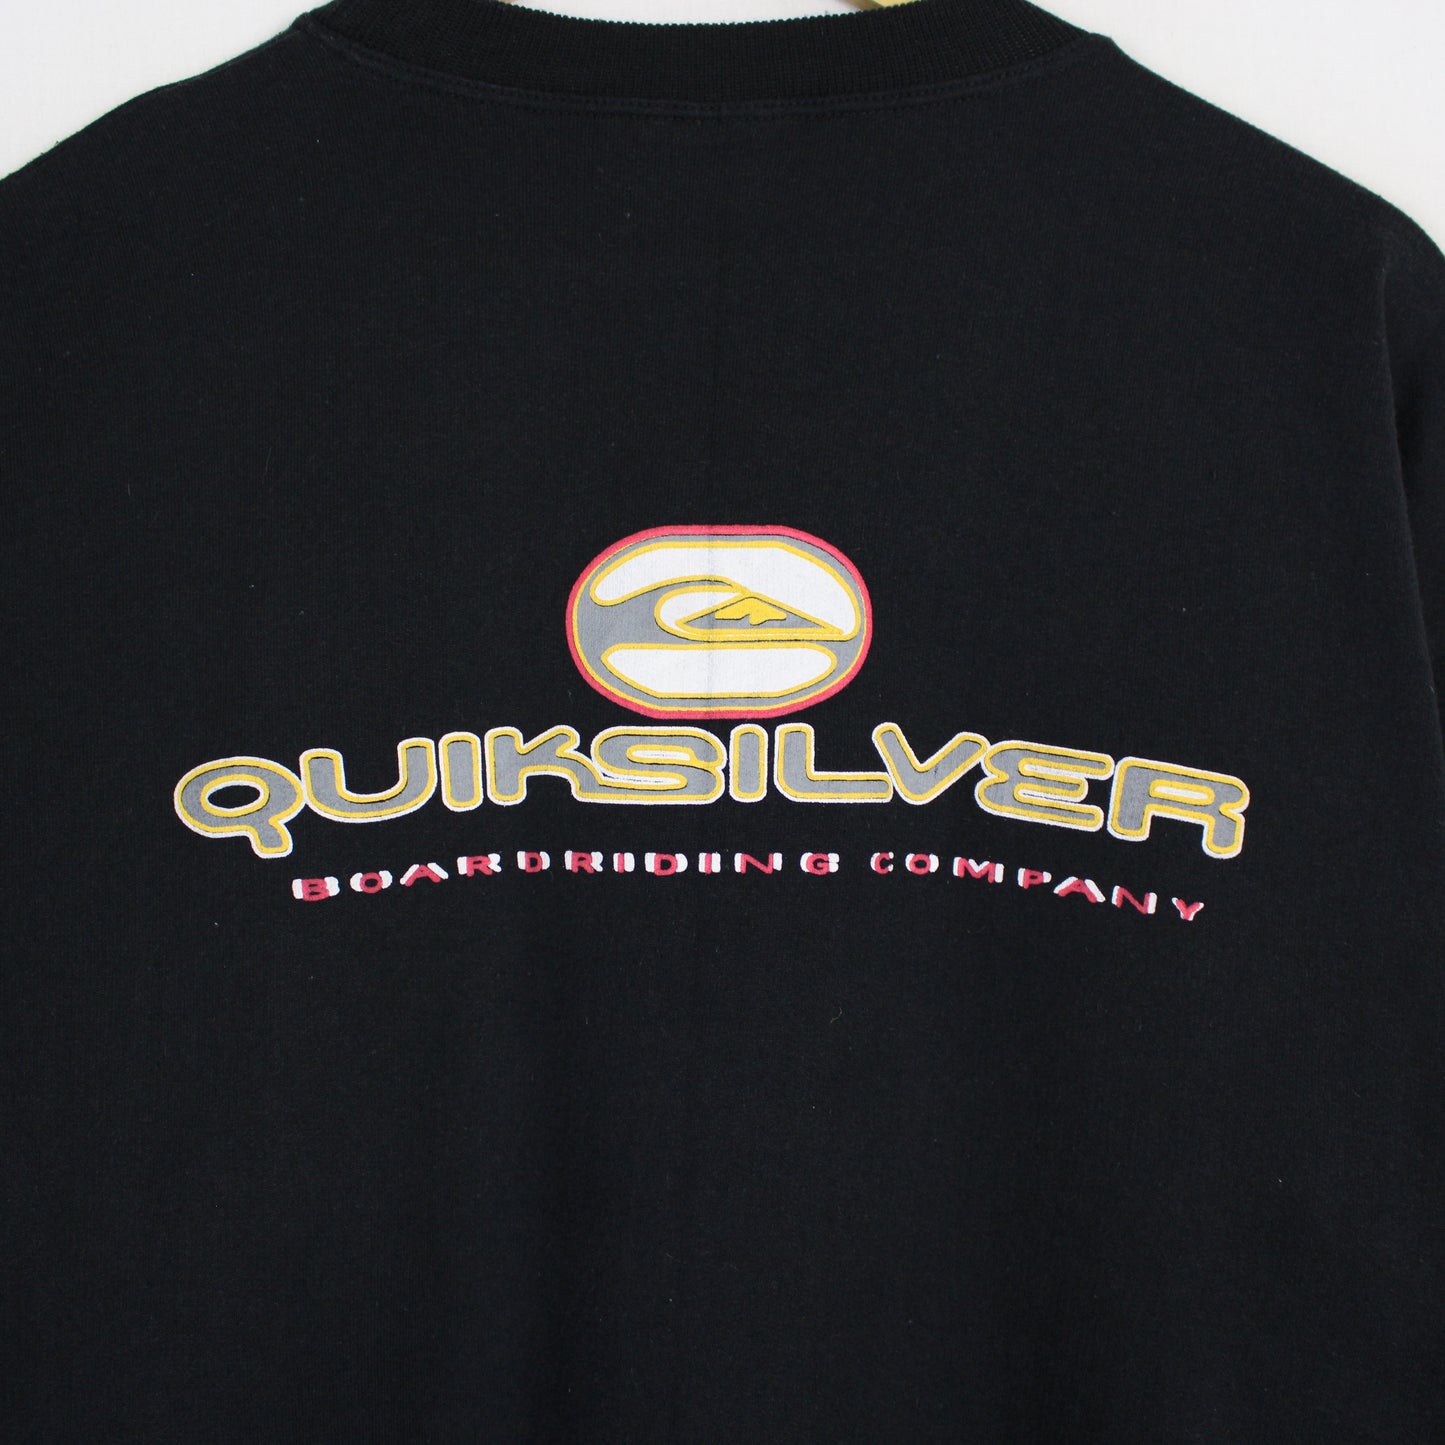 Vintage Quiksilver Boardriding Sweatshirt - M